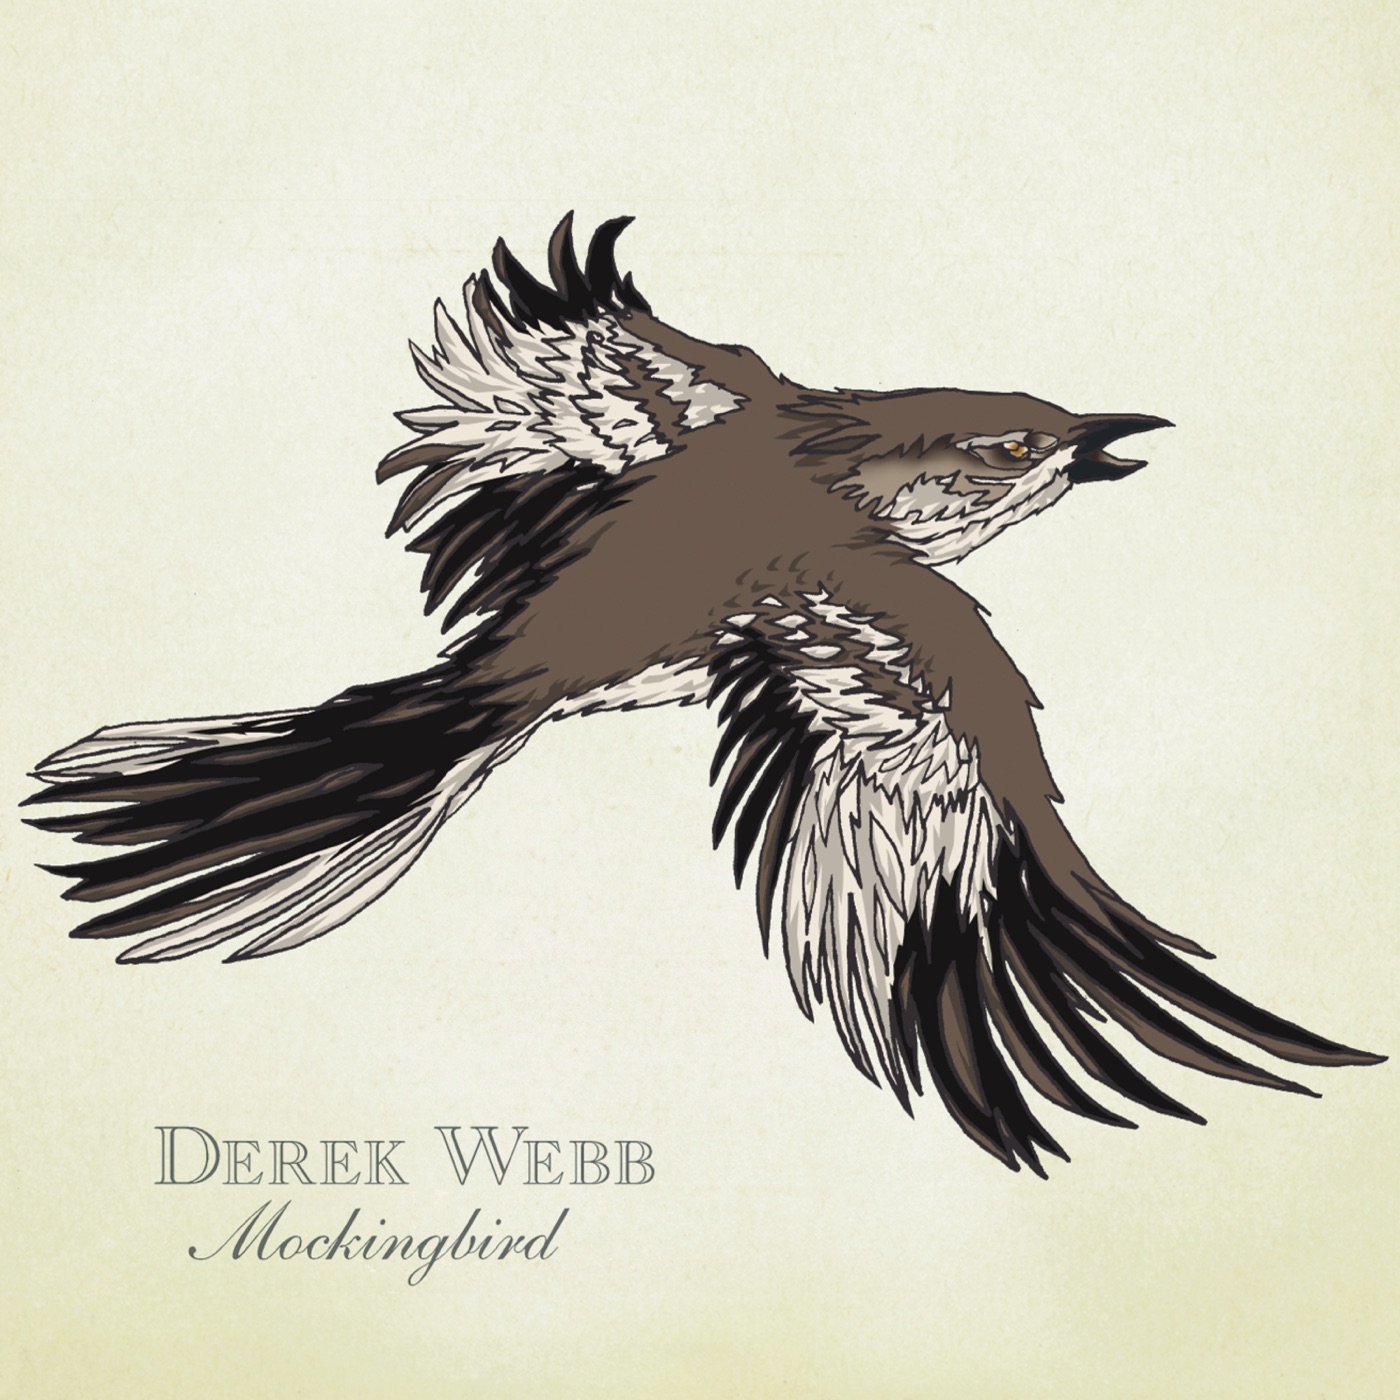 Mockingbird by Derek Webb